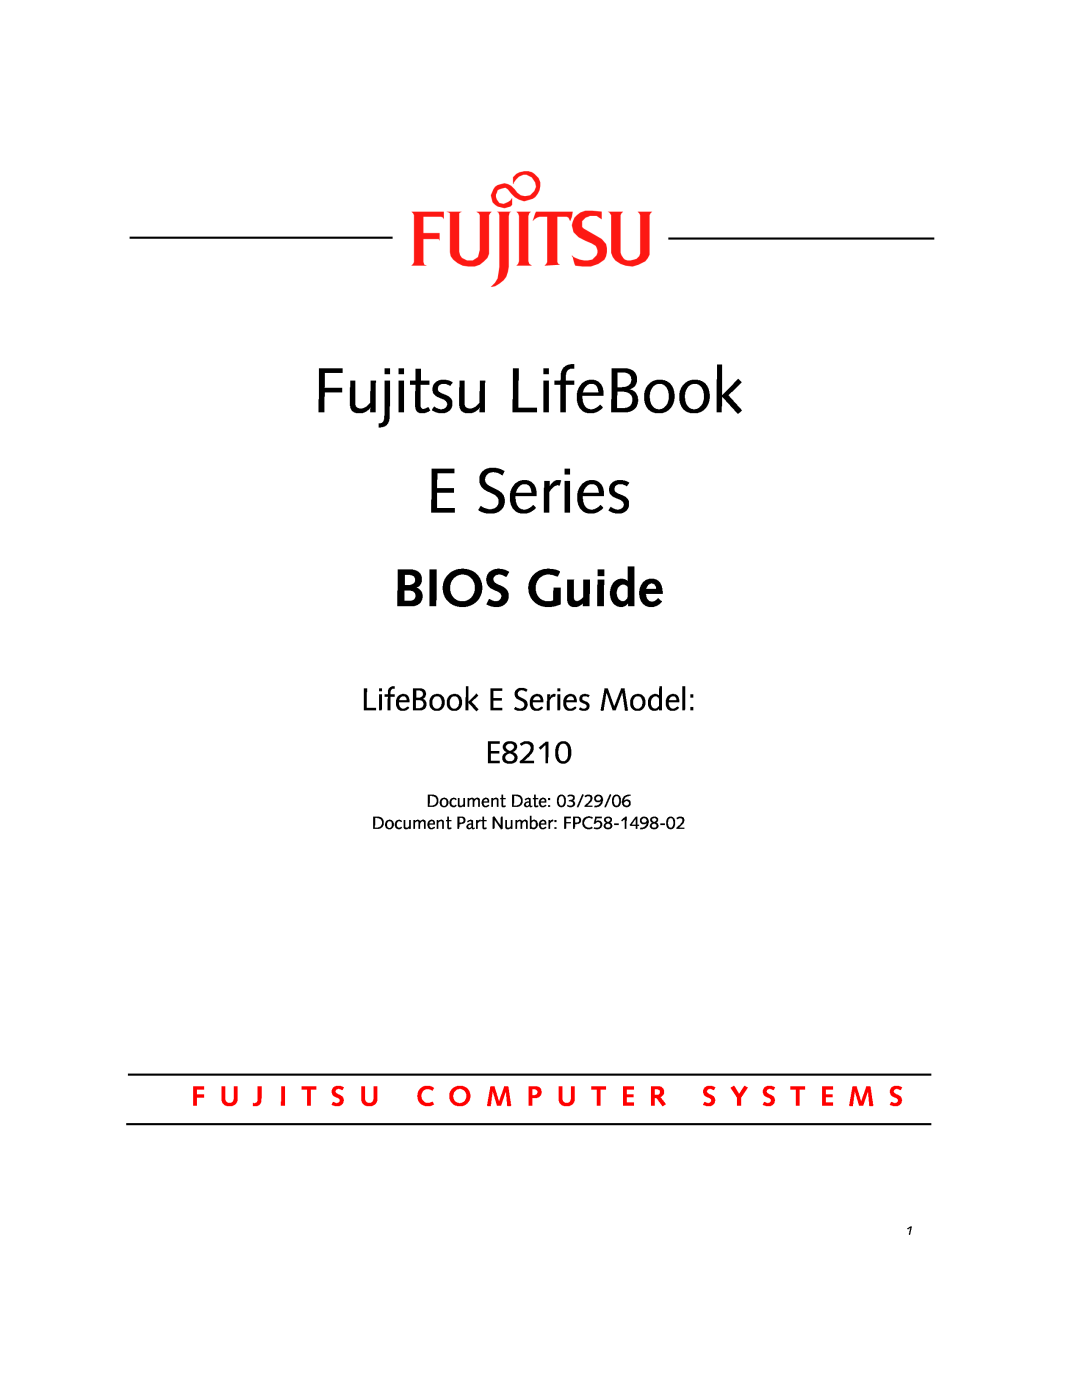 Fujitsu Siemens Computers manual Fujitsu LifeBook E Series, BIOS Guide, LifeBook E Series Model E8210 